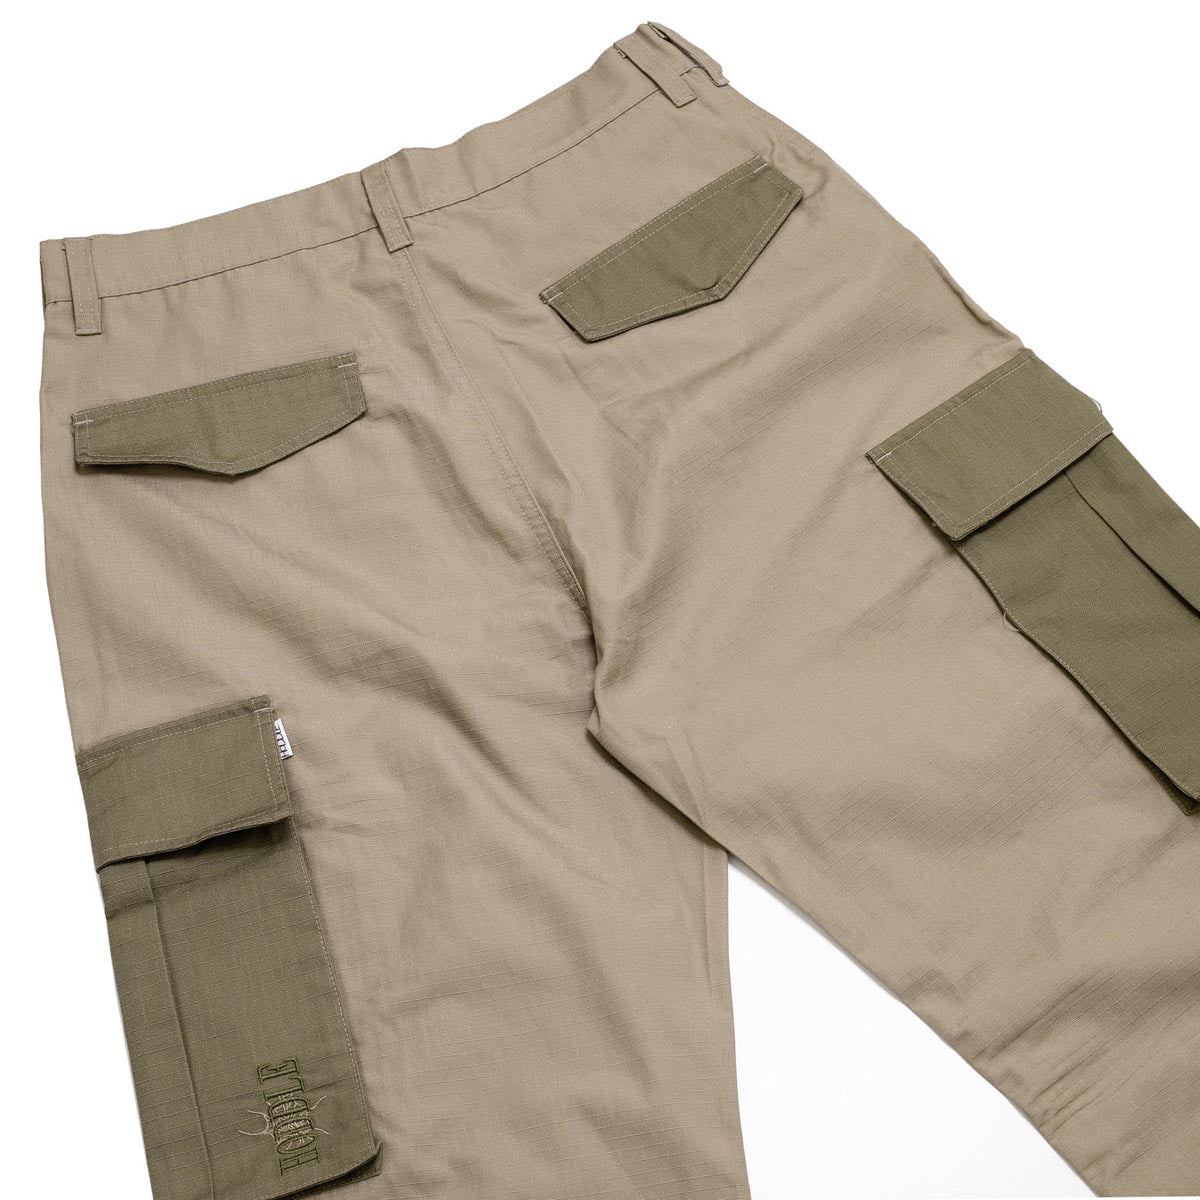 Hoddle Pleated Rip Stop Cargo Pants - Tan/Khaki image 4